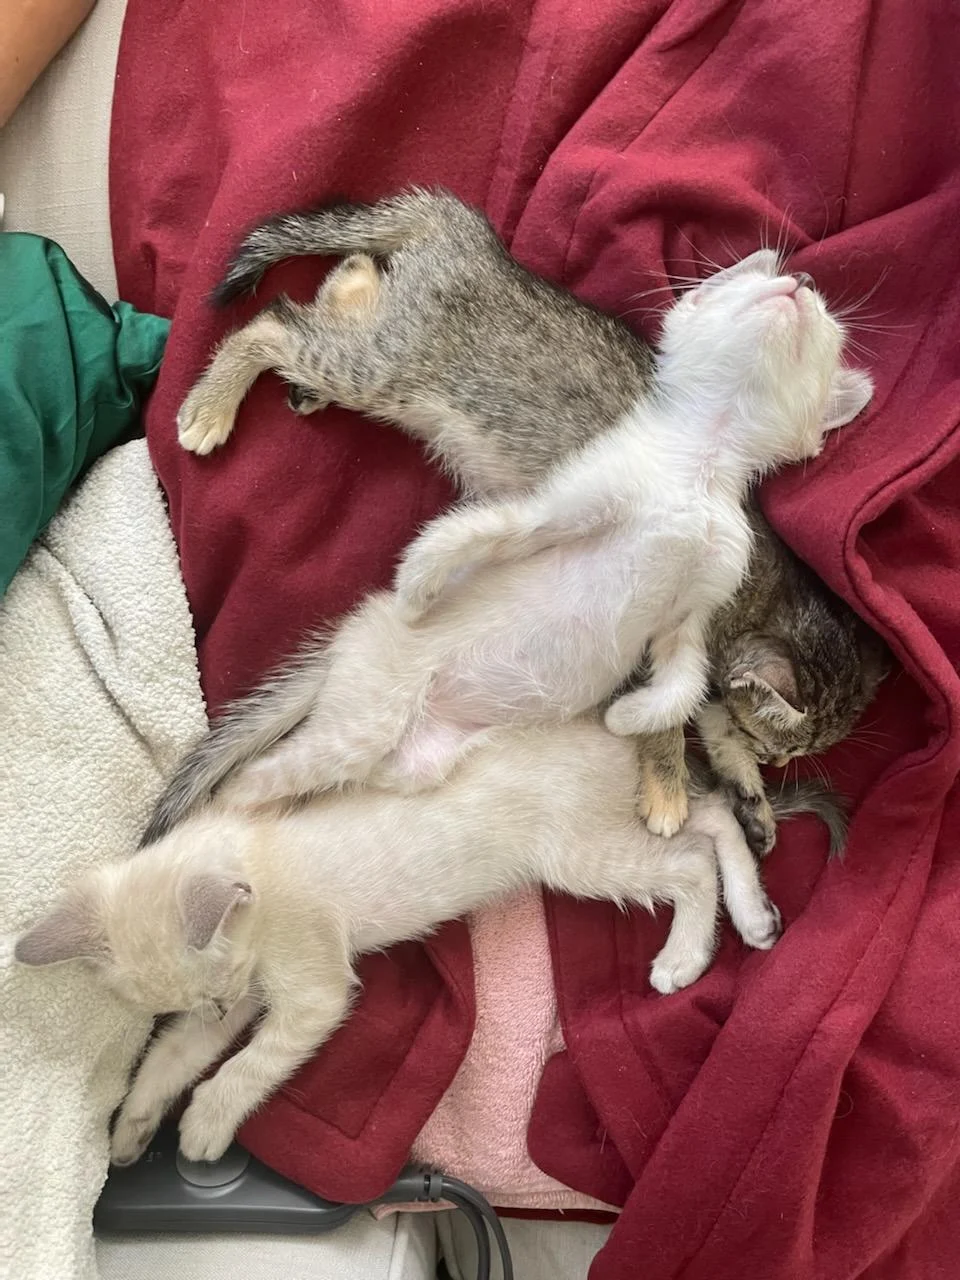 Rescue kittens resting